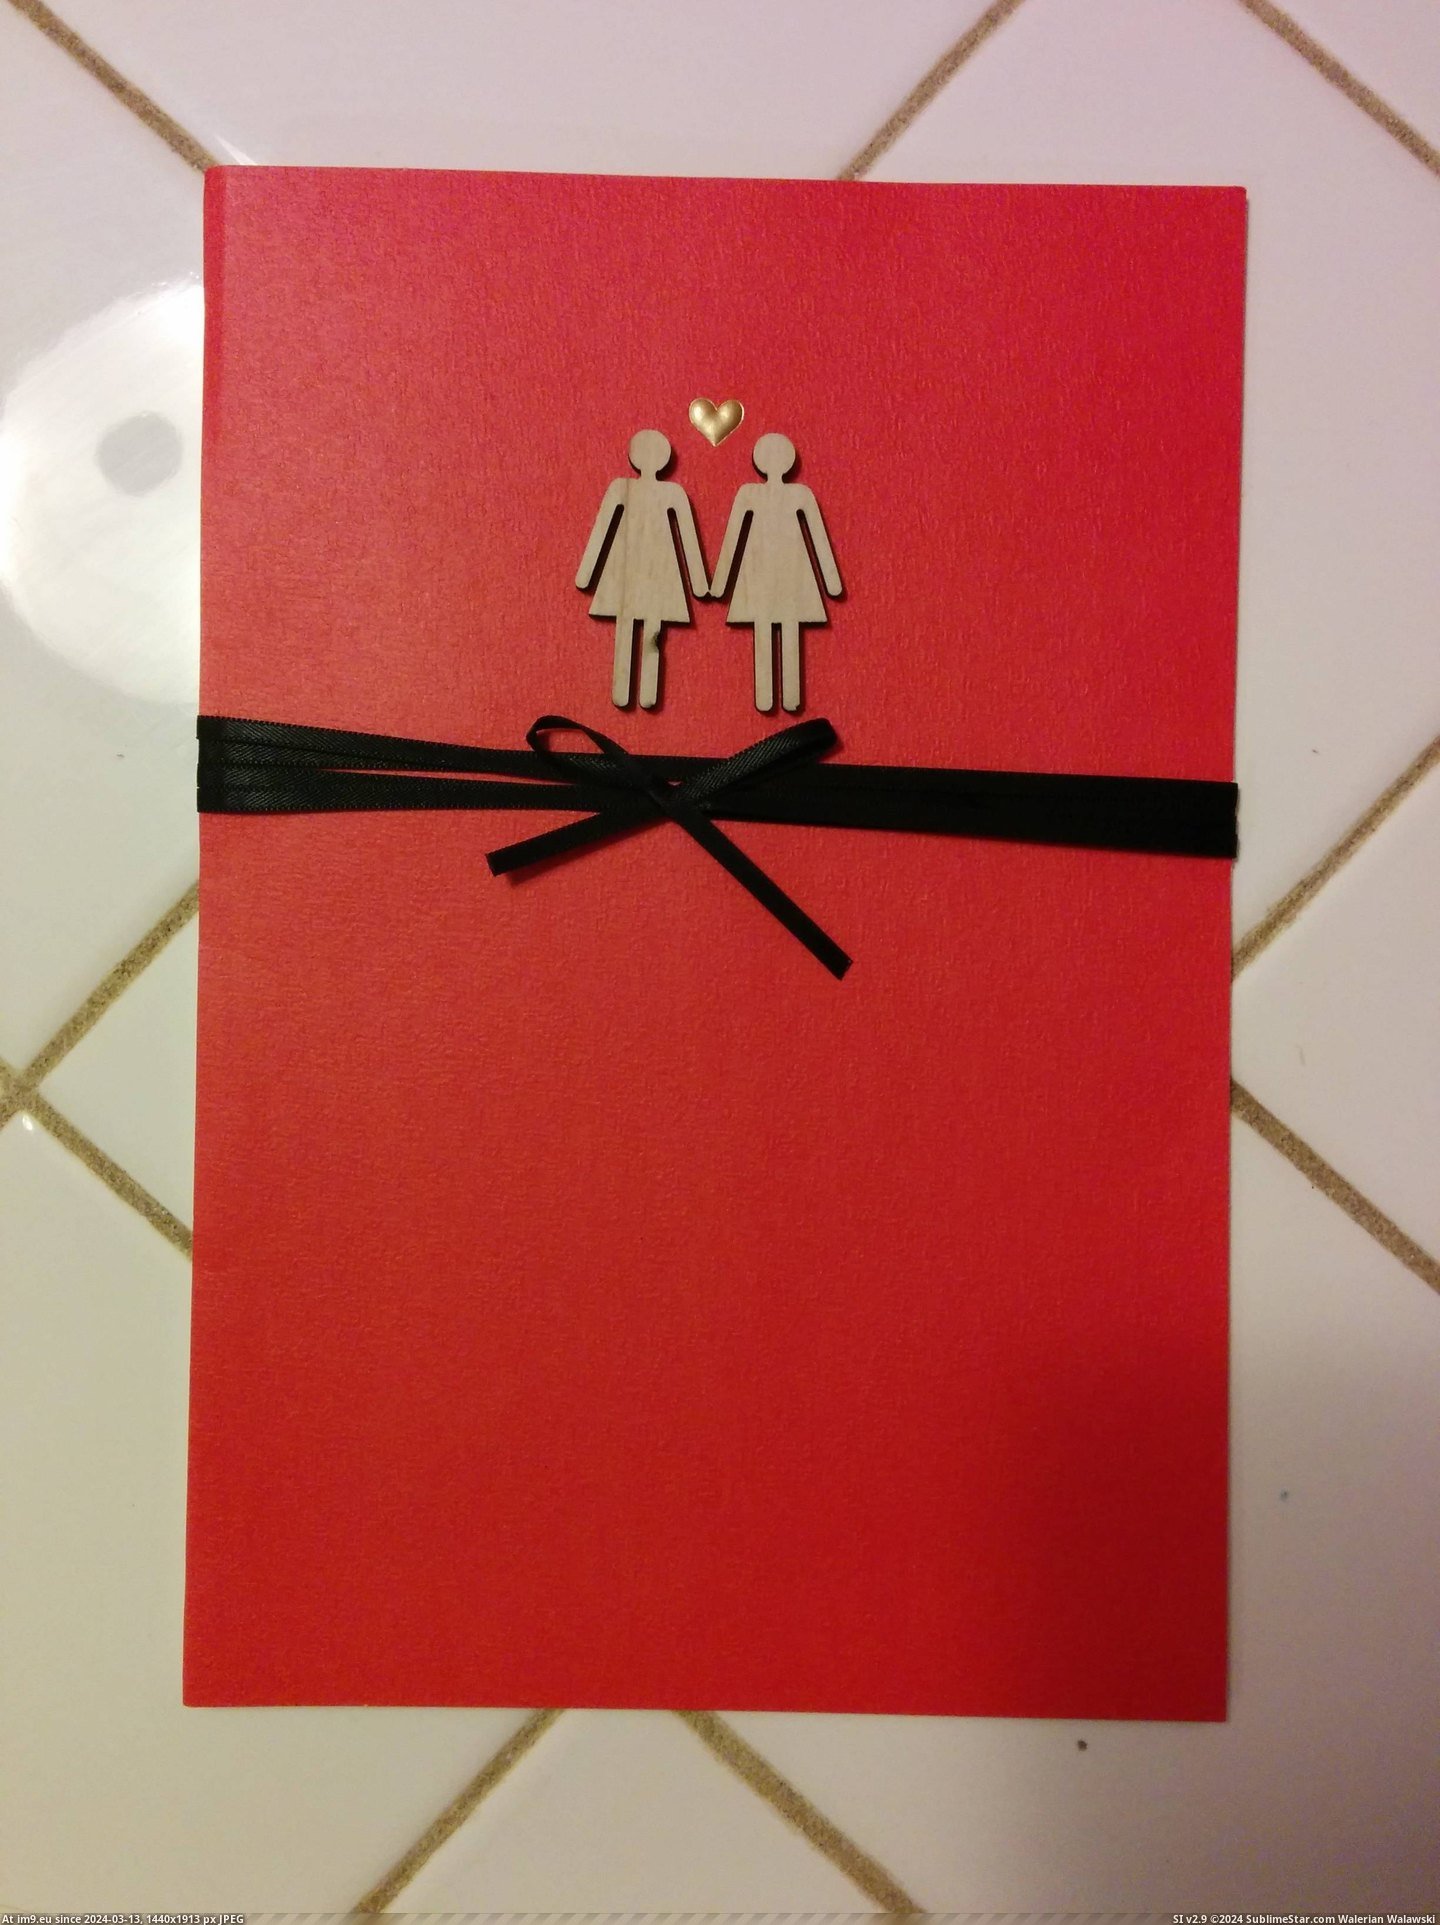 #Wife #Man #Lesbian #Valentines #Welp #Bought #Card #Realized [Mildlyinteresting] Welp, just realized I bought a lesbian Valentines Card for my wife (I'm a man) Pic. (Изображение из альбом My r/MILDLYINTERESTING favs))